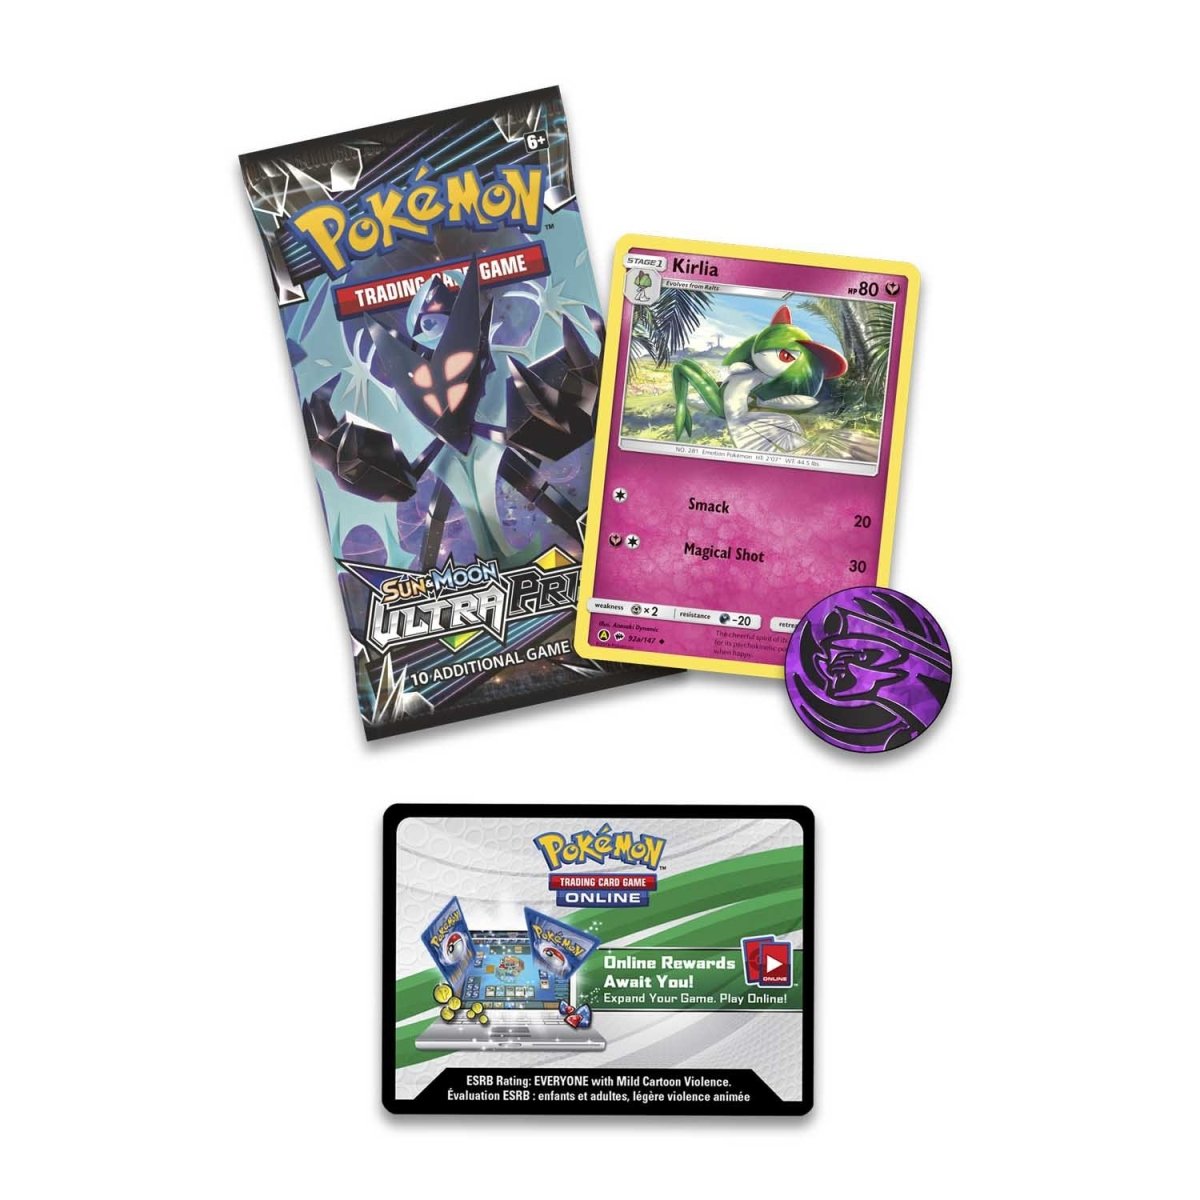 Auction Item 273353093695 TCG Cards 2018 Pokemon Sun & Moon Ultra Prism